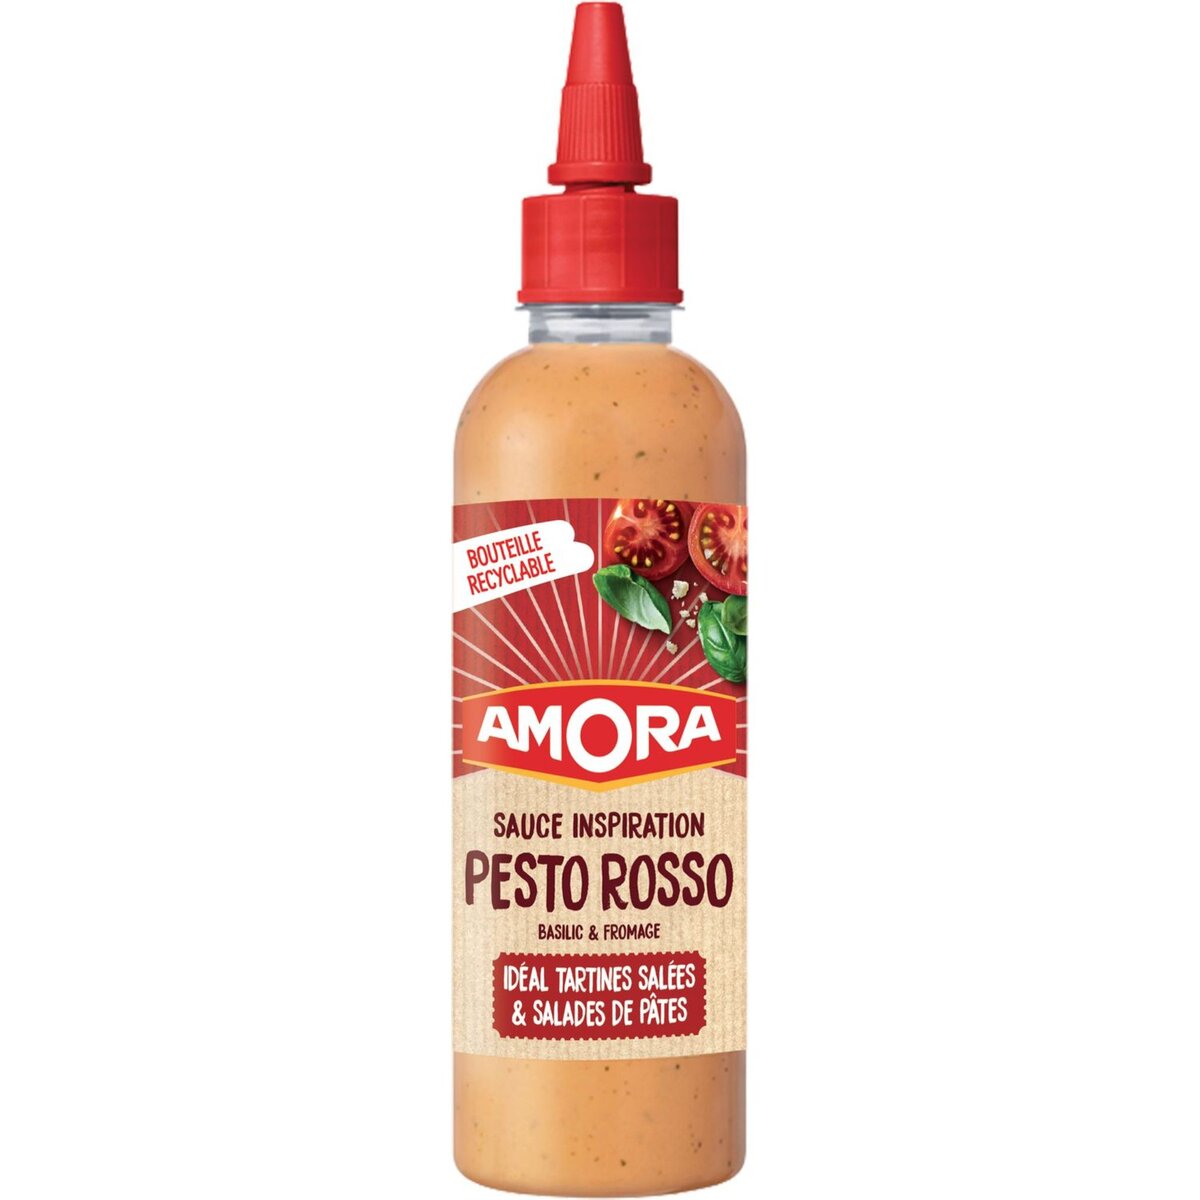 AMORA Amora Sauce inspiration pesto rosso basilic et fromage 220g 220g